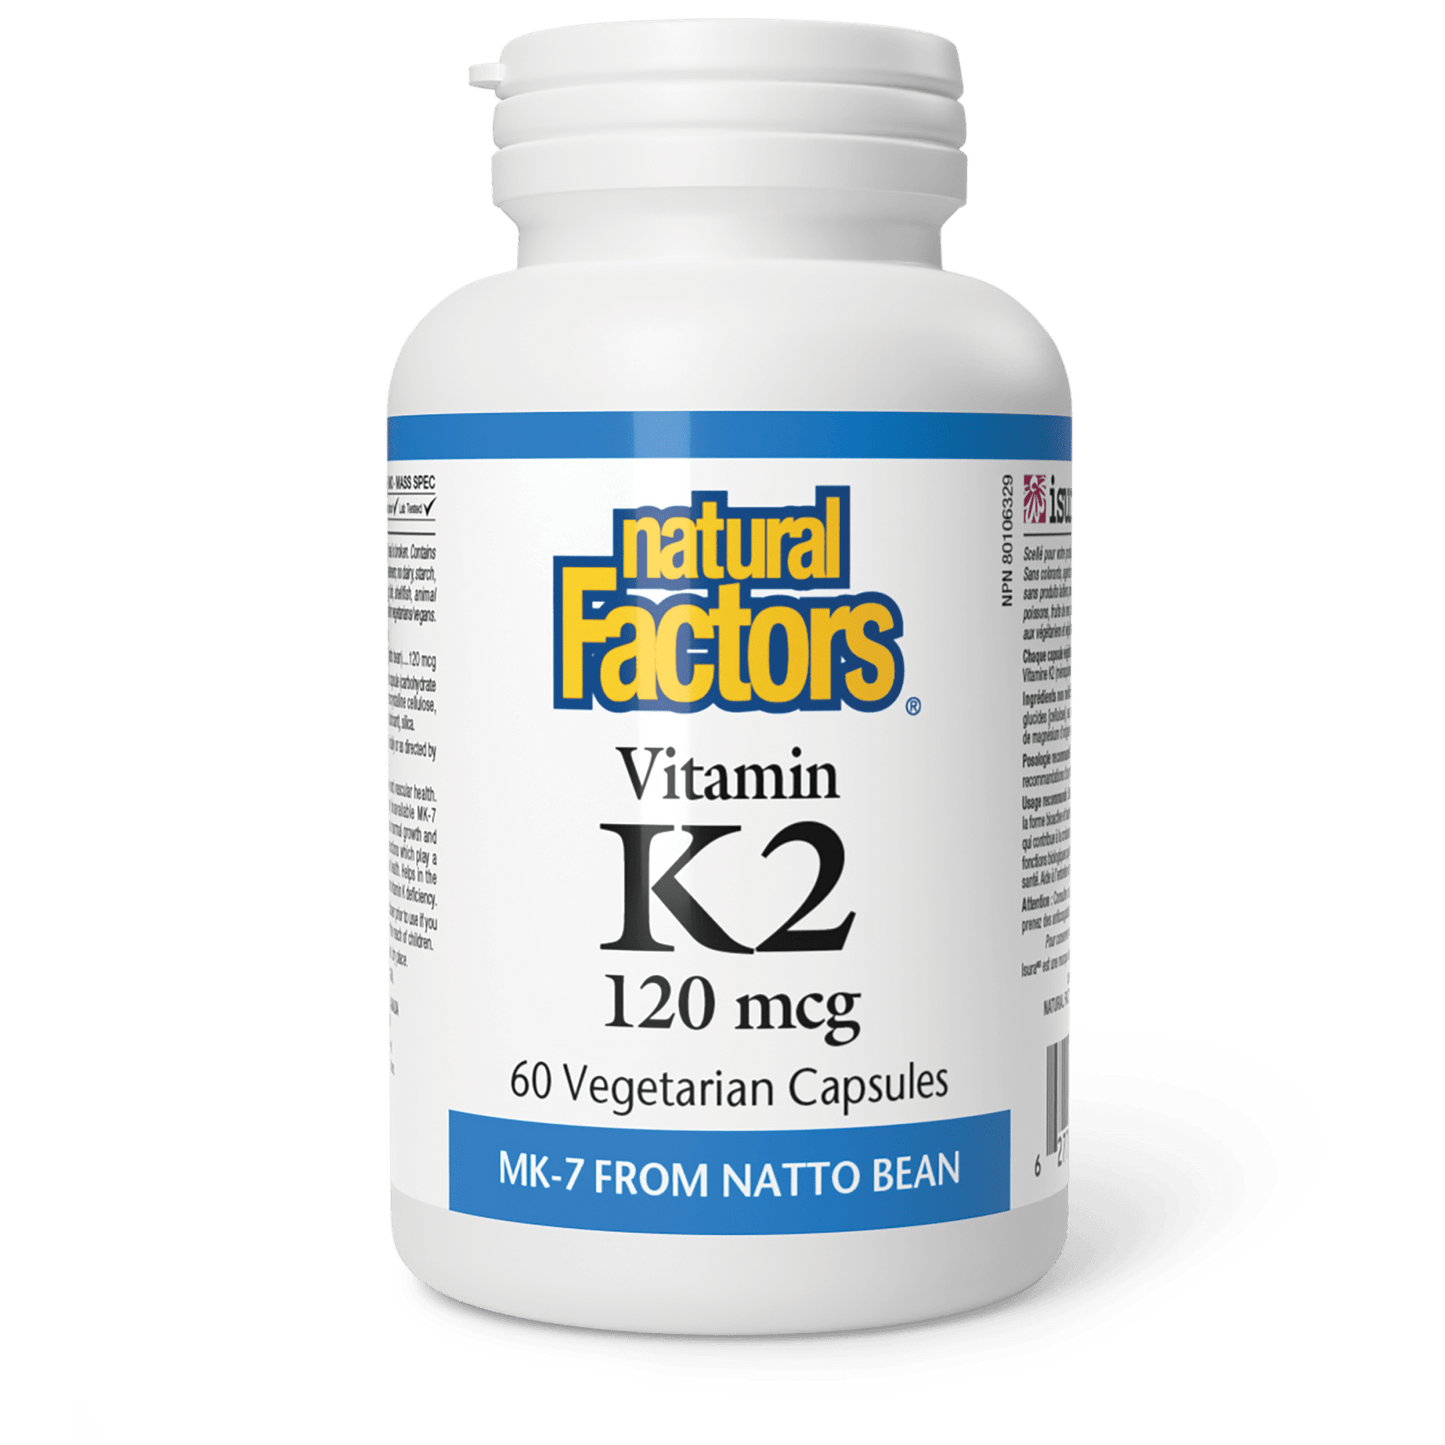 Vitamin K2 120 mcg, Natural Factors|v|image|1296